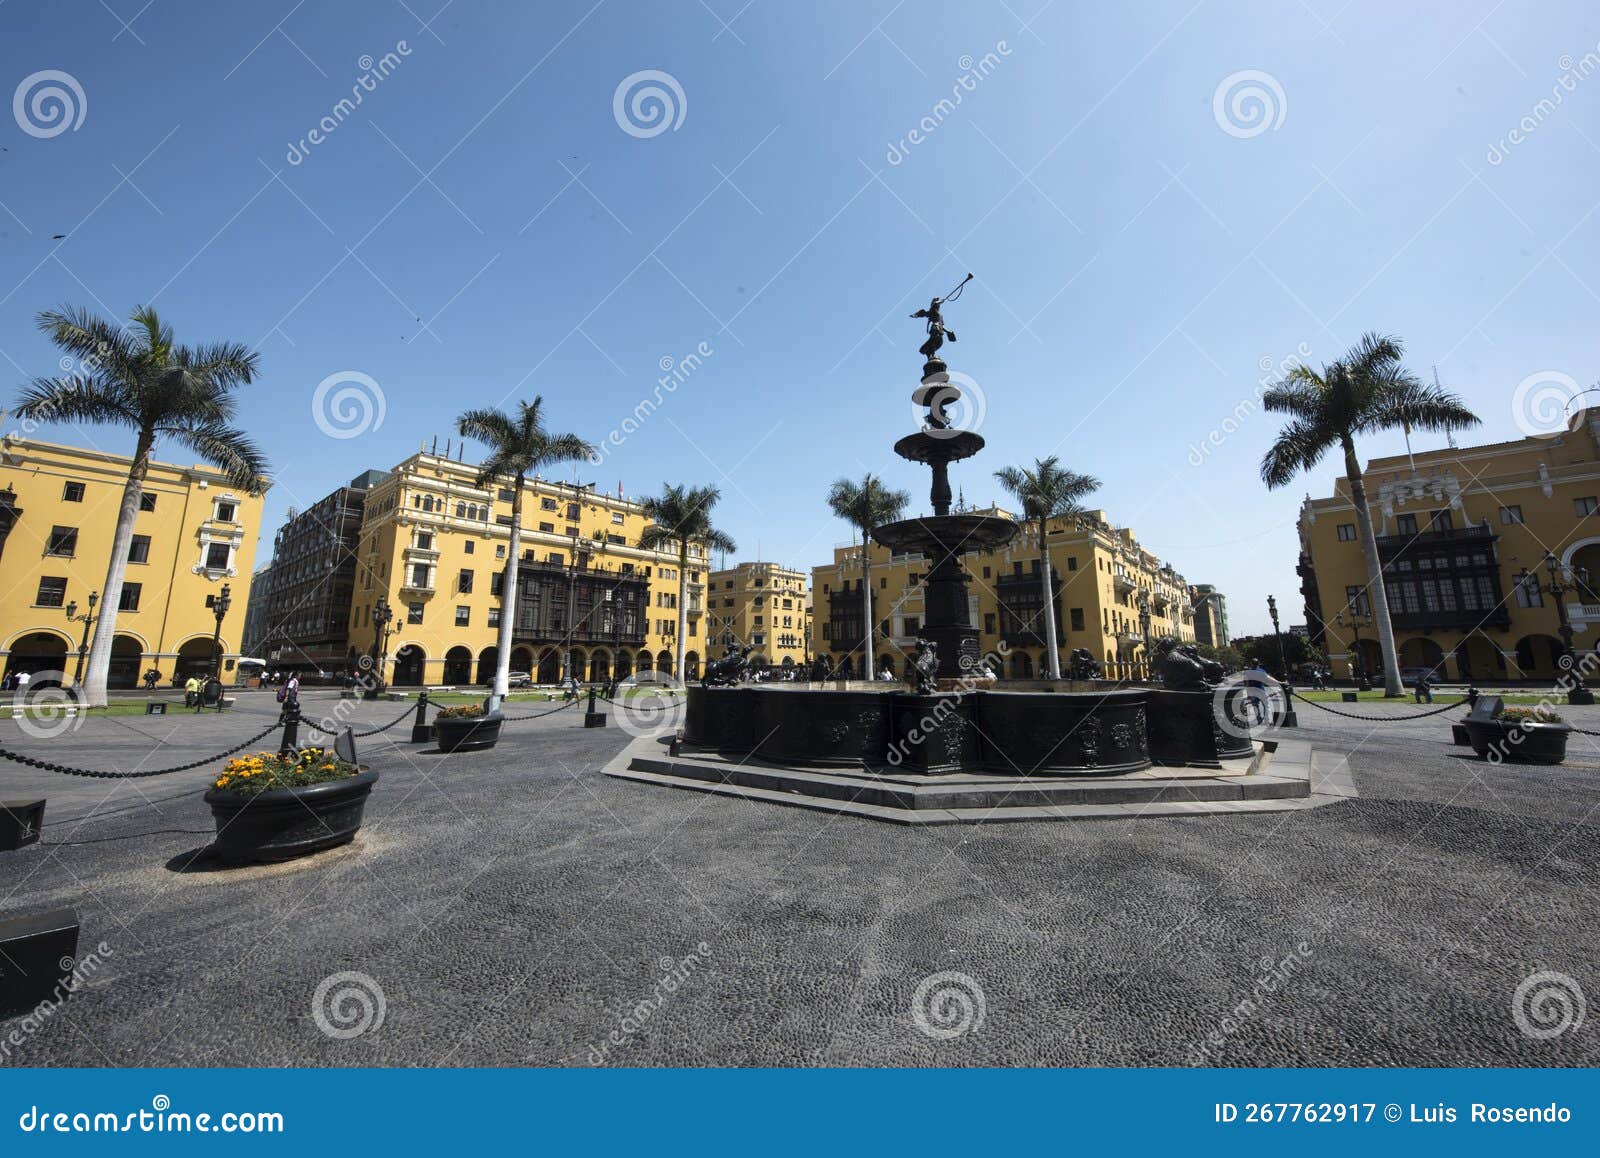 lima's plaza mayor or plaza de armas de lima water fountain peru